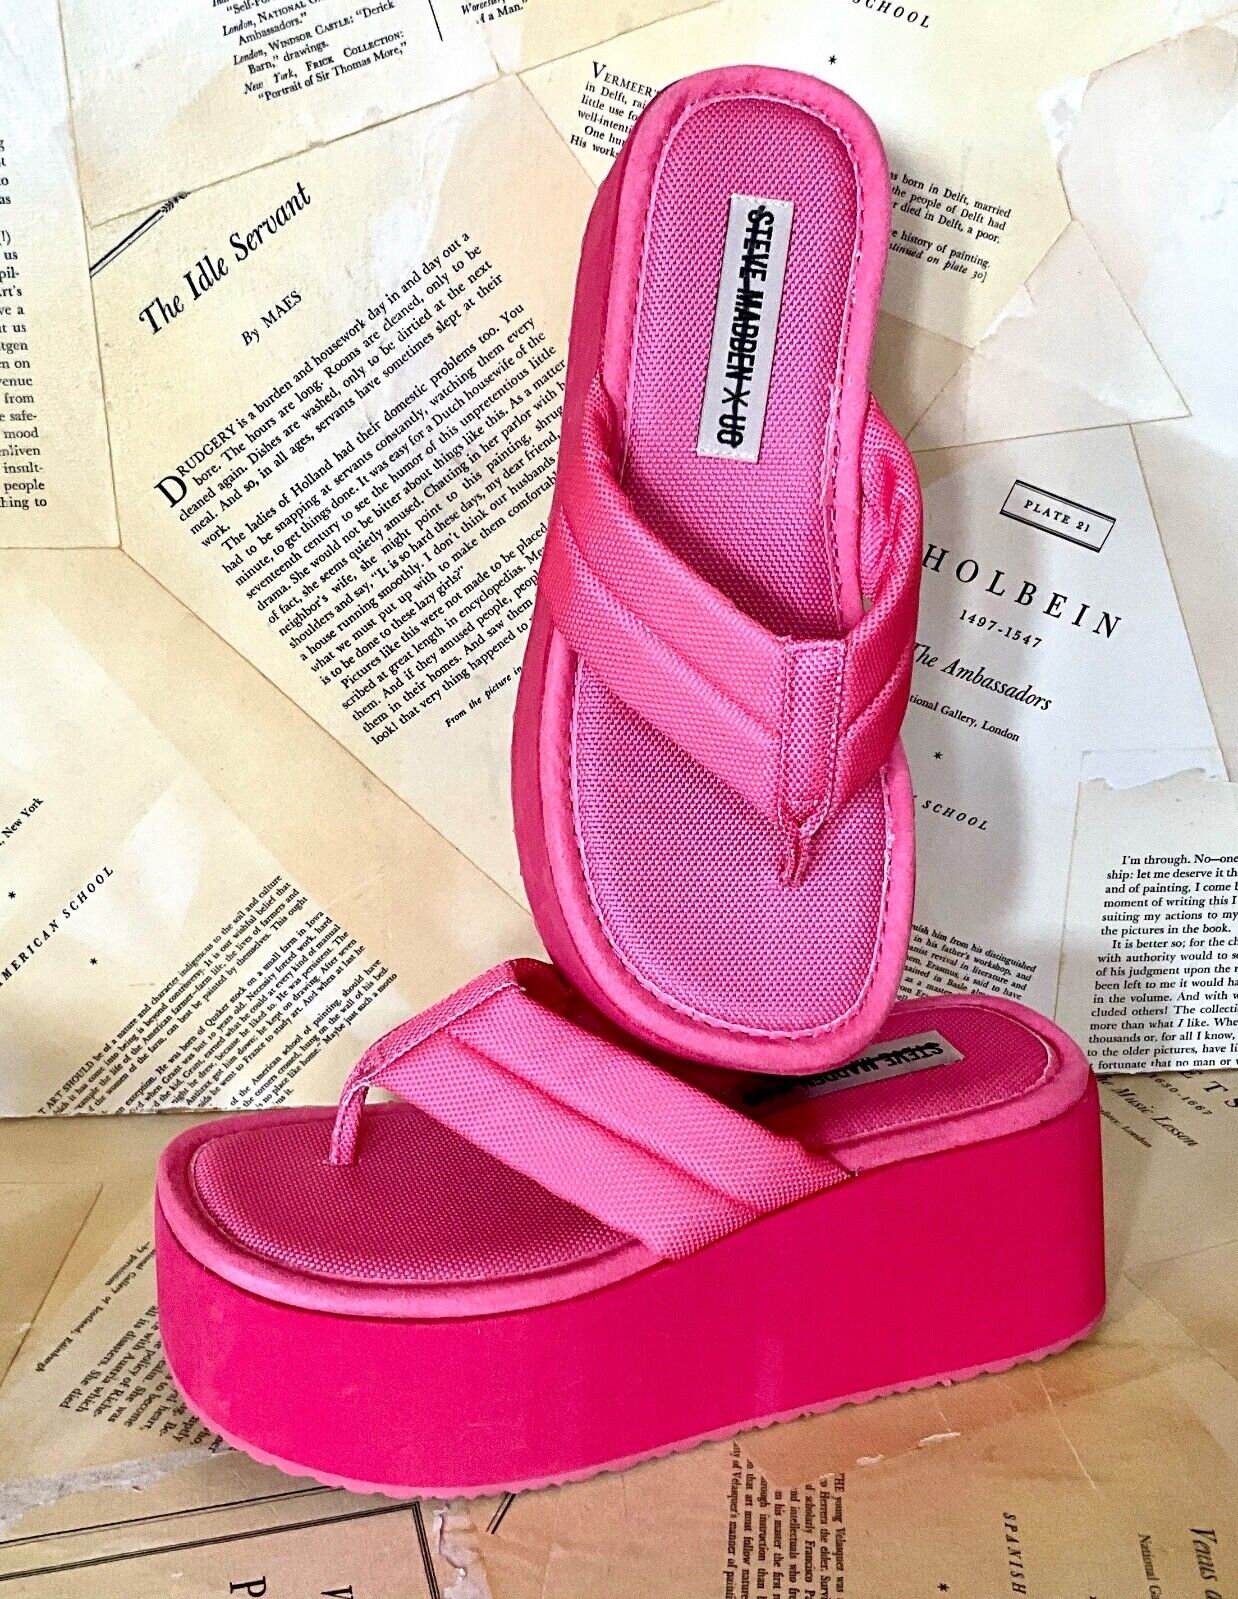 Сандалии-стринги на платформе Urban Outfitters X Steve Madden Contempo, розовая пена 7, НОВИНКА